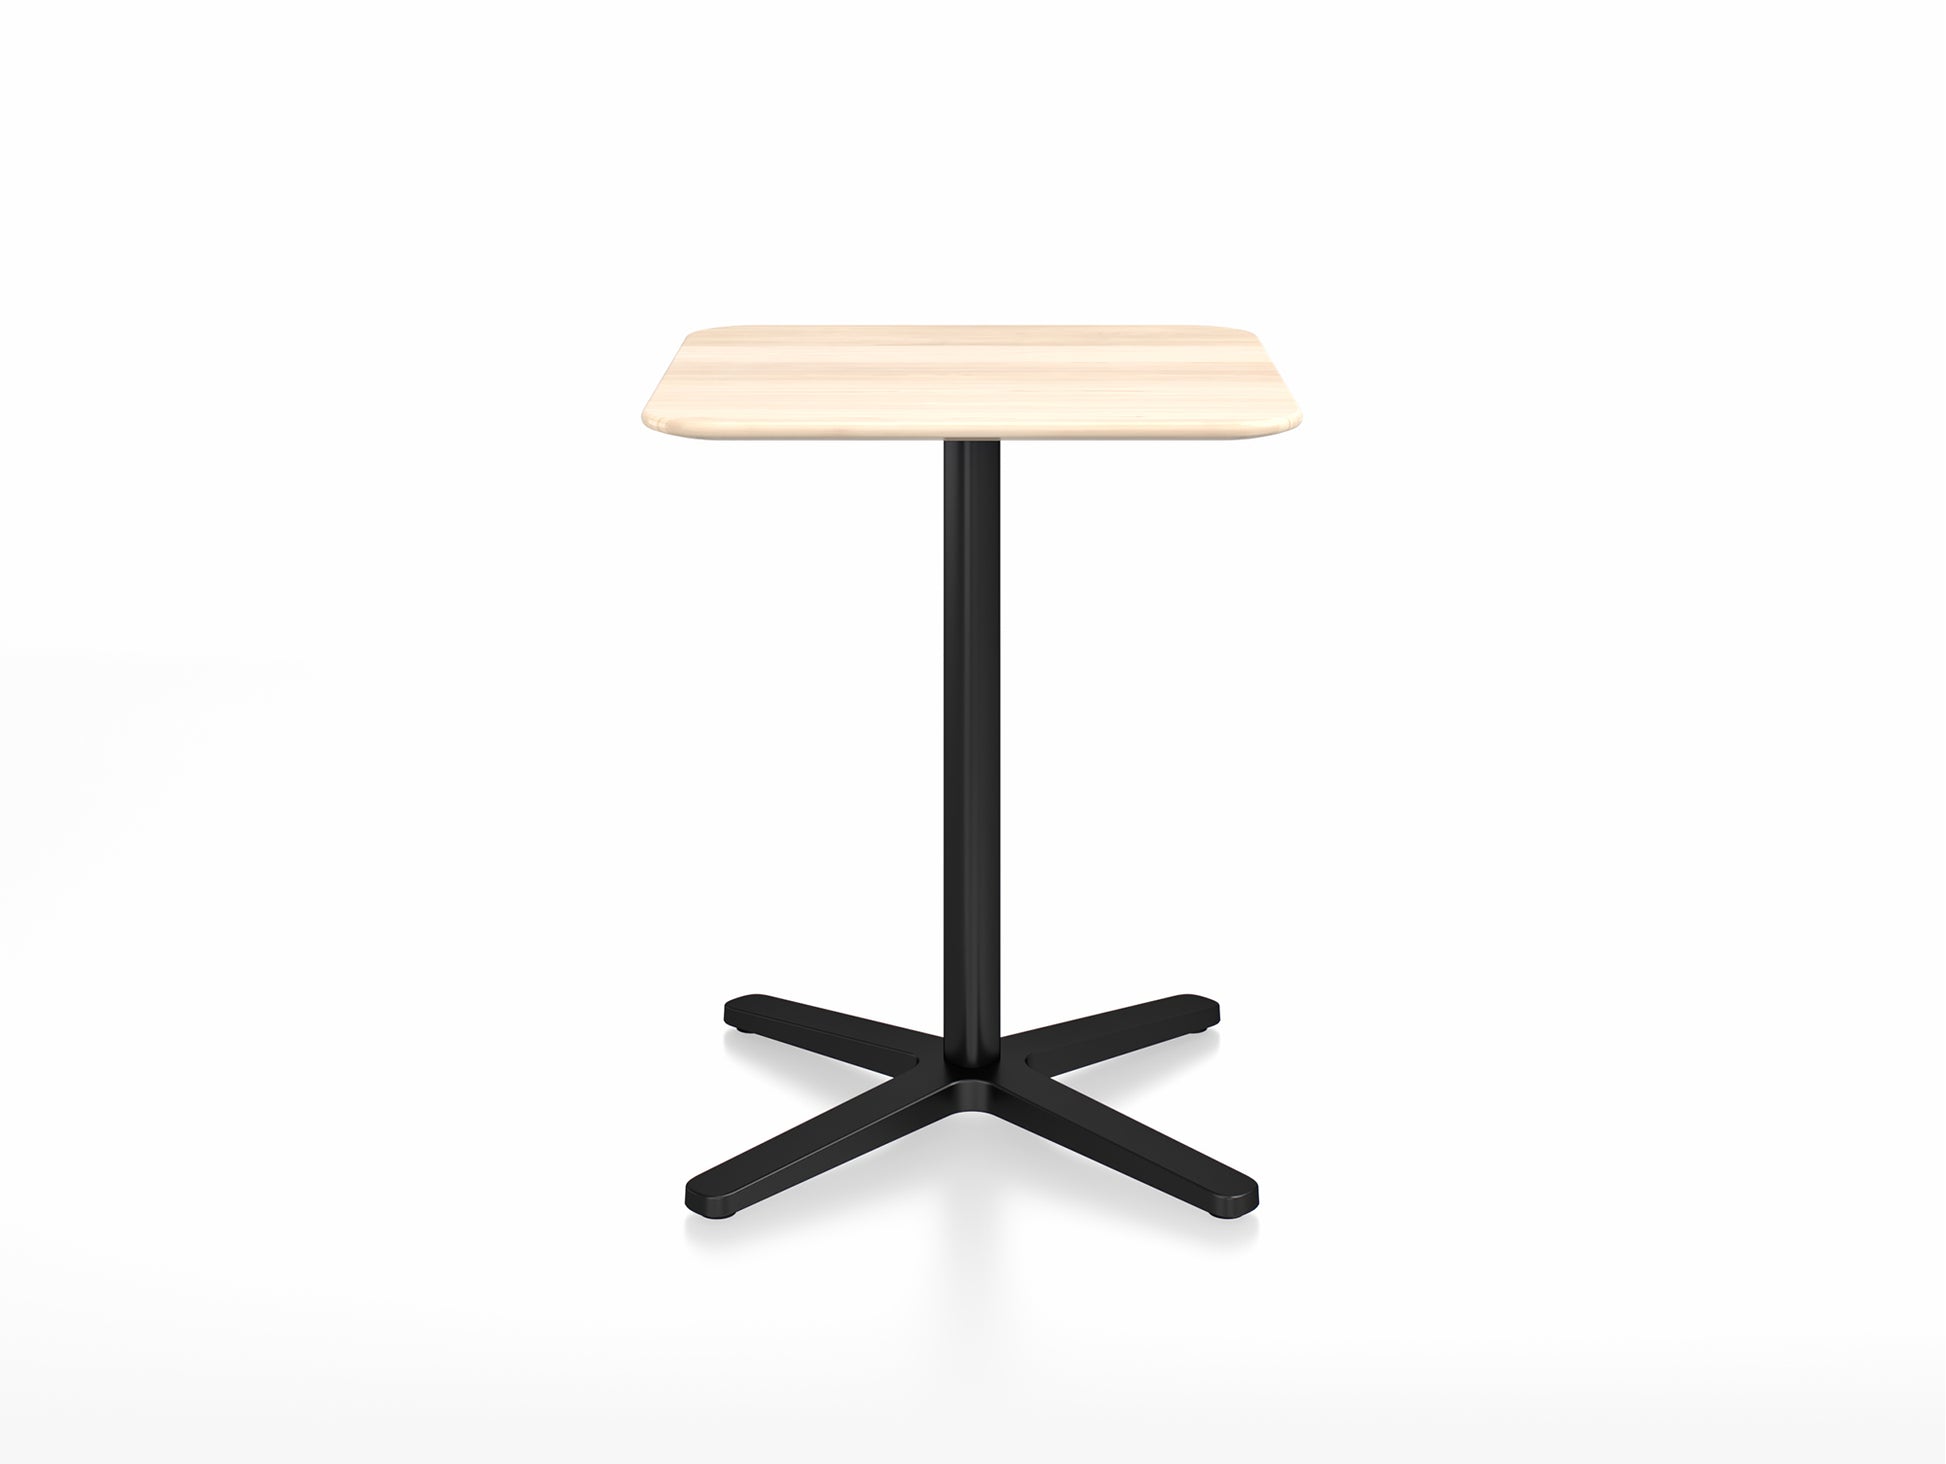 2 Inch Outdoor Cafe Table - X Base by Emeco - Accoya Wood Top / Black Aluminium Base / 60x60